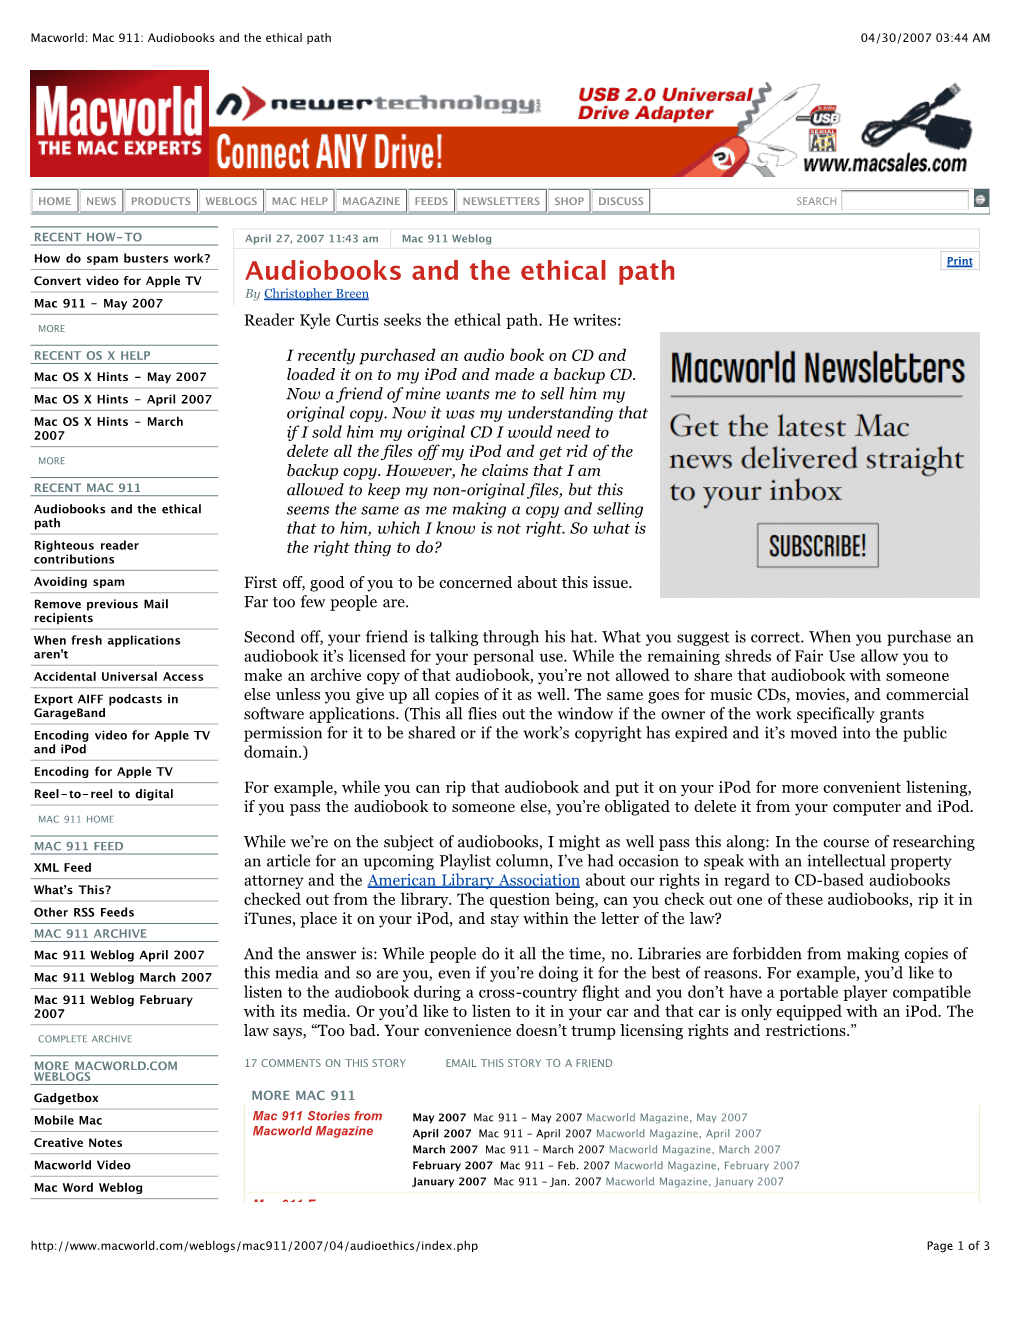 Macworld: Mac 911: Audiobooks and the Ethical Path 04/30/2007 03:44 AM